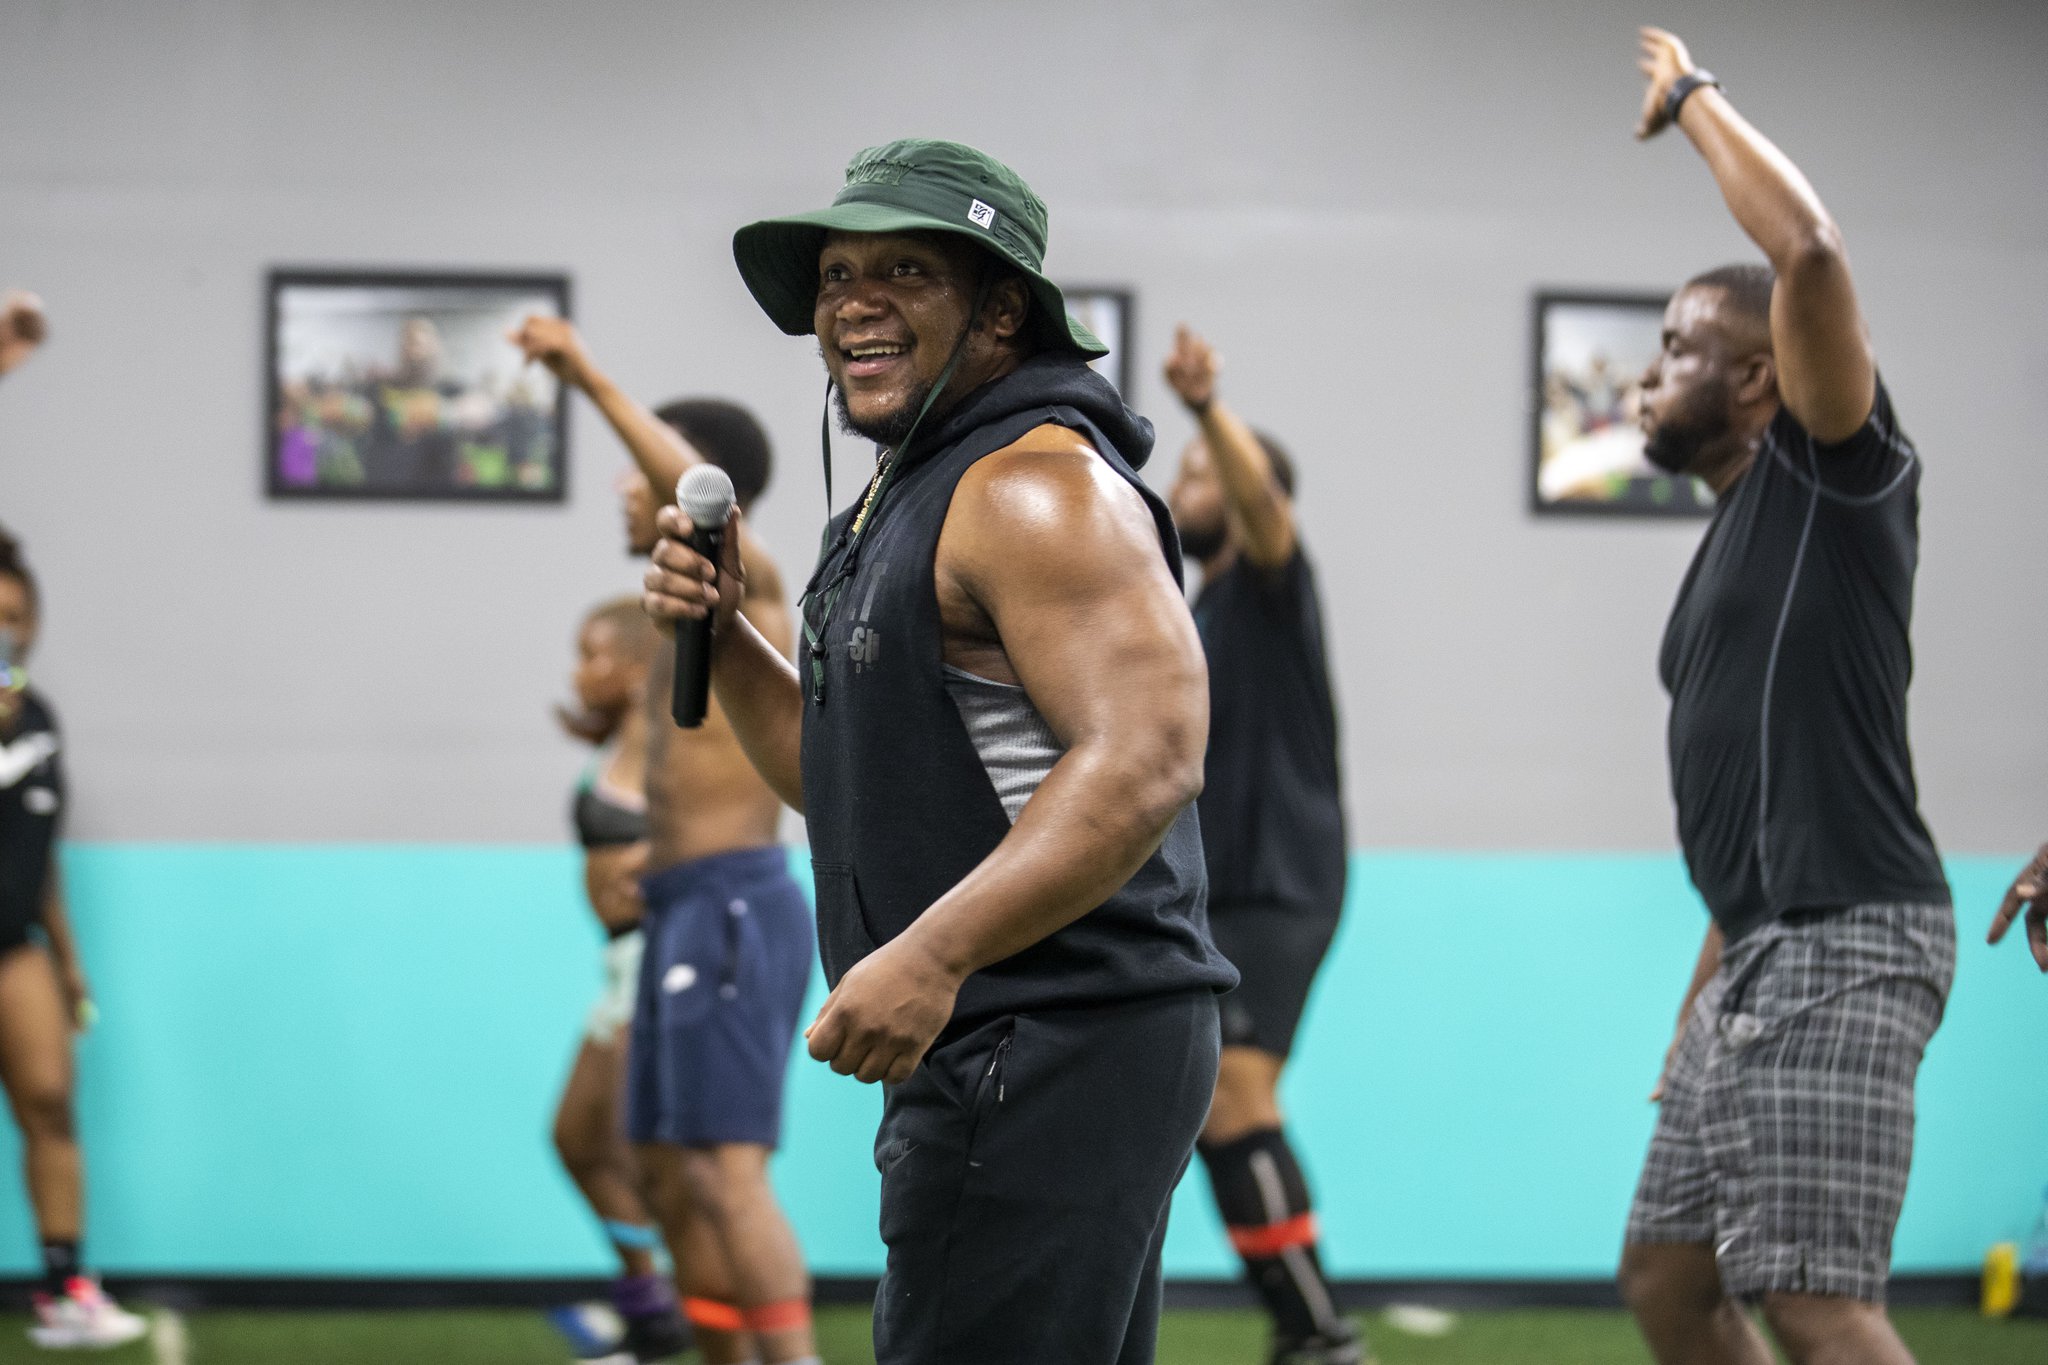 Black-owned Pole fitness classes Atlanta, Twirl N Shape Fitness